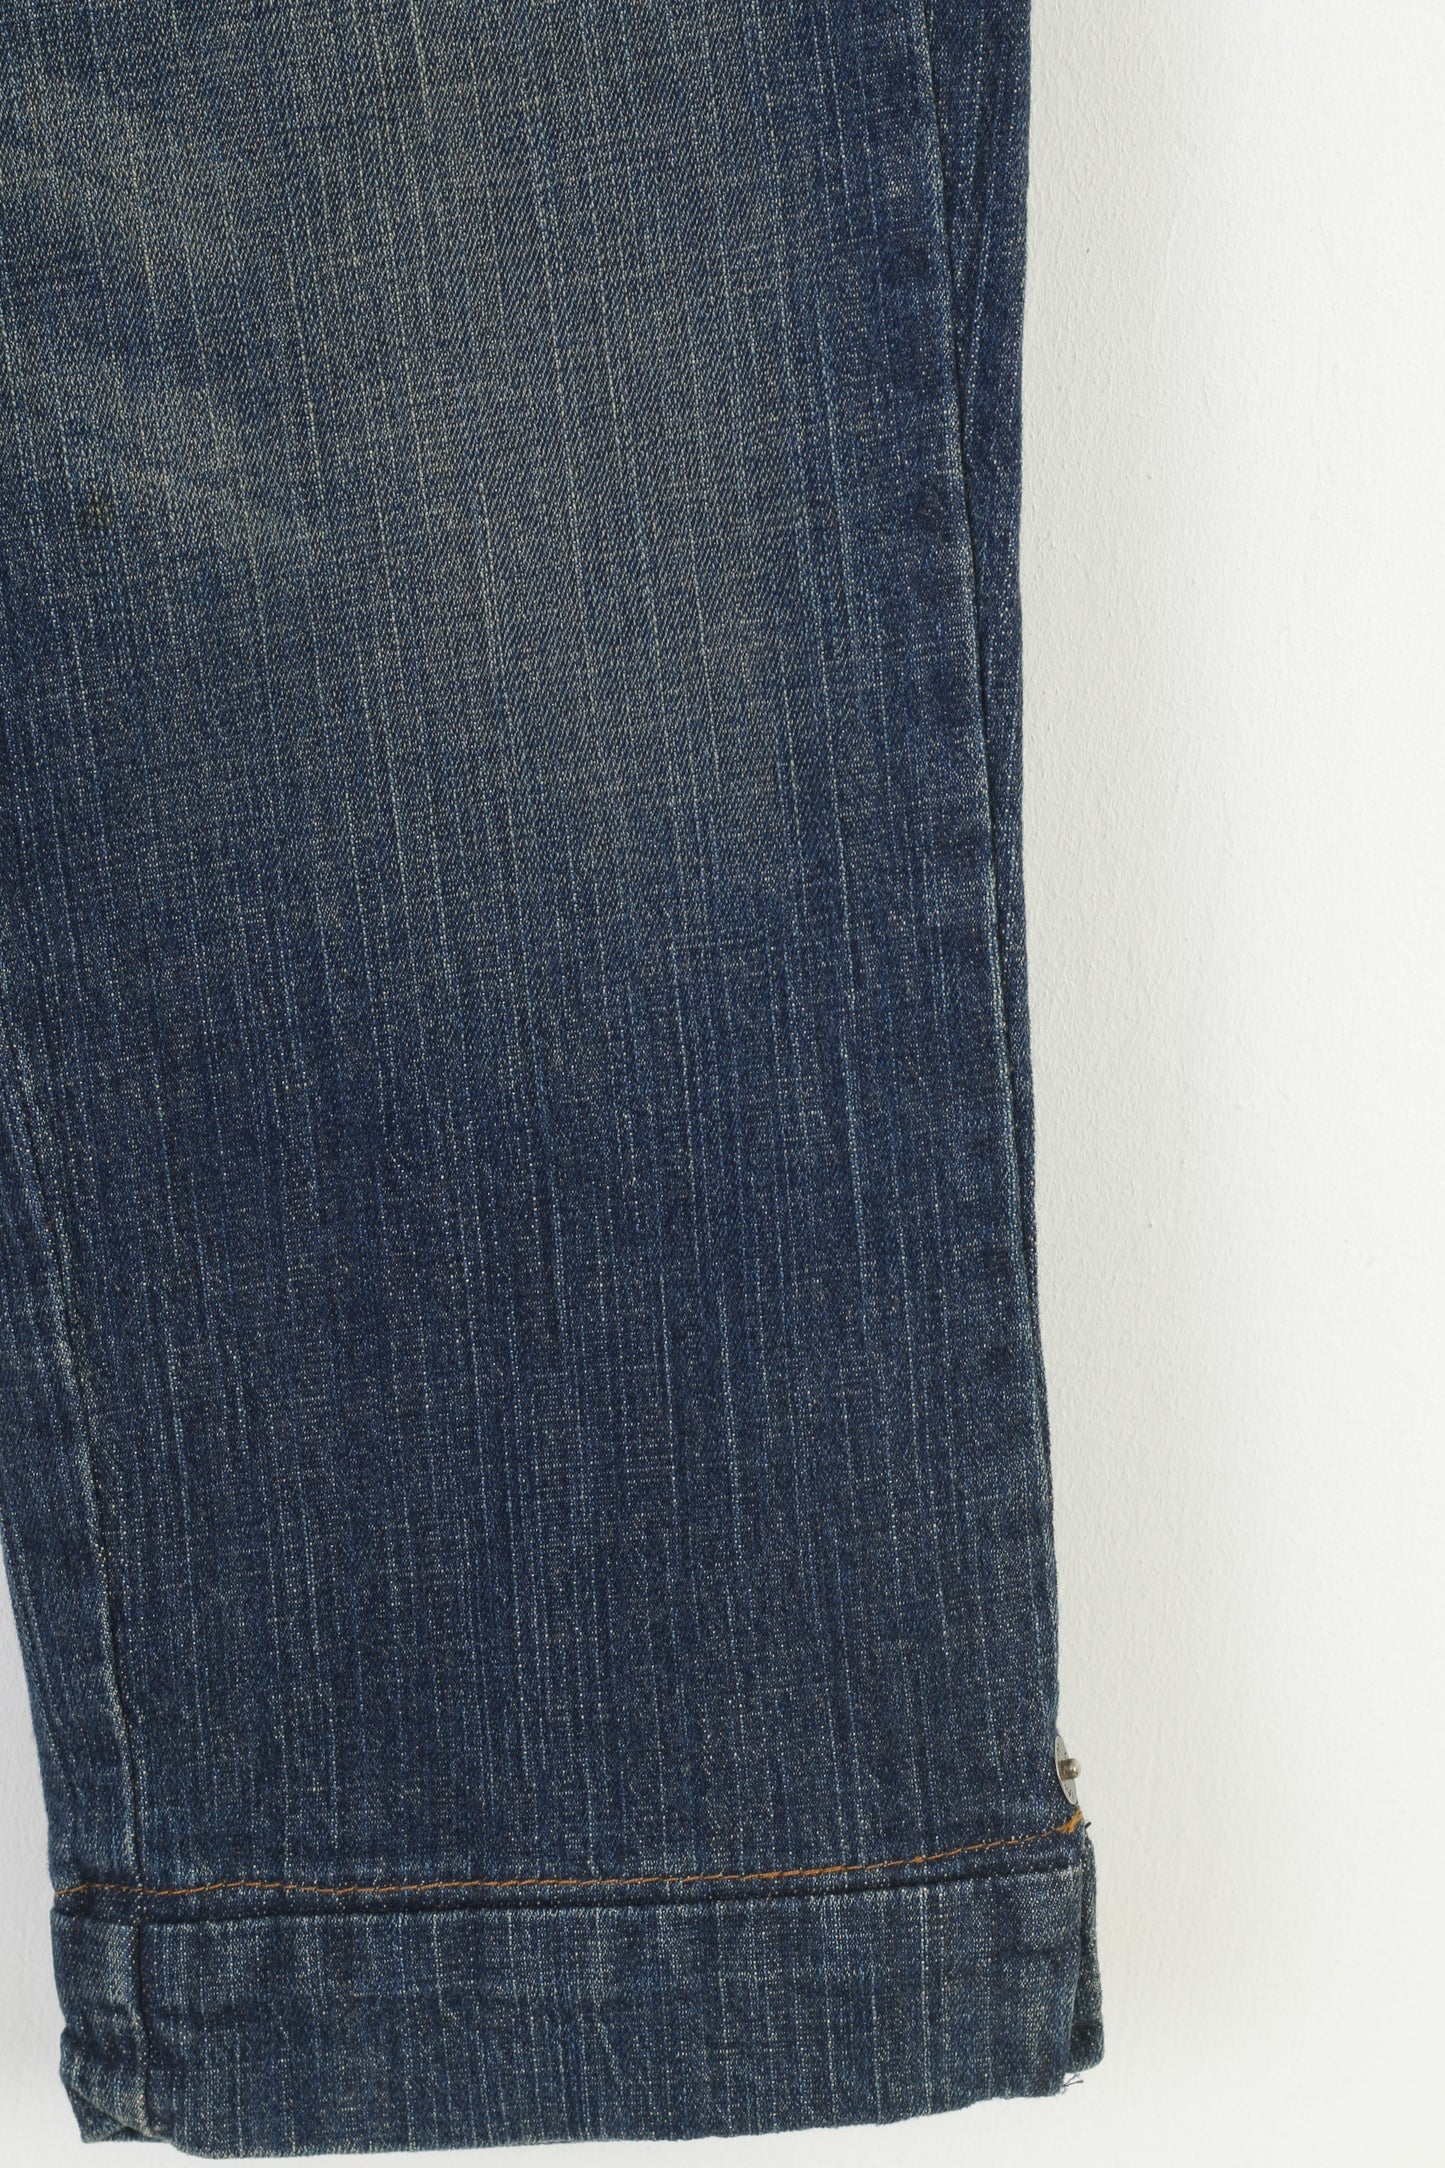 Lee Femme 3 M Pantalon Capri Bleu Marine Jeans Denim Coton Pantalon Vintage